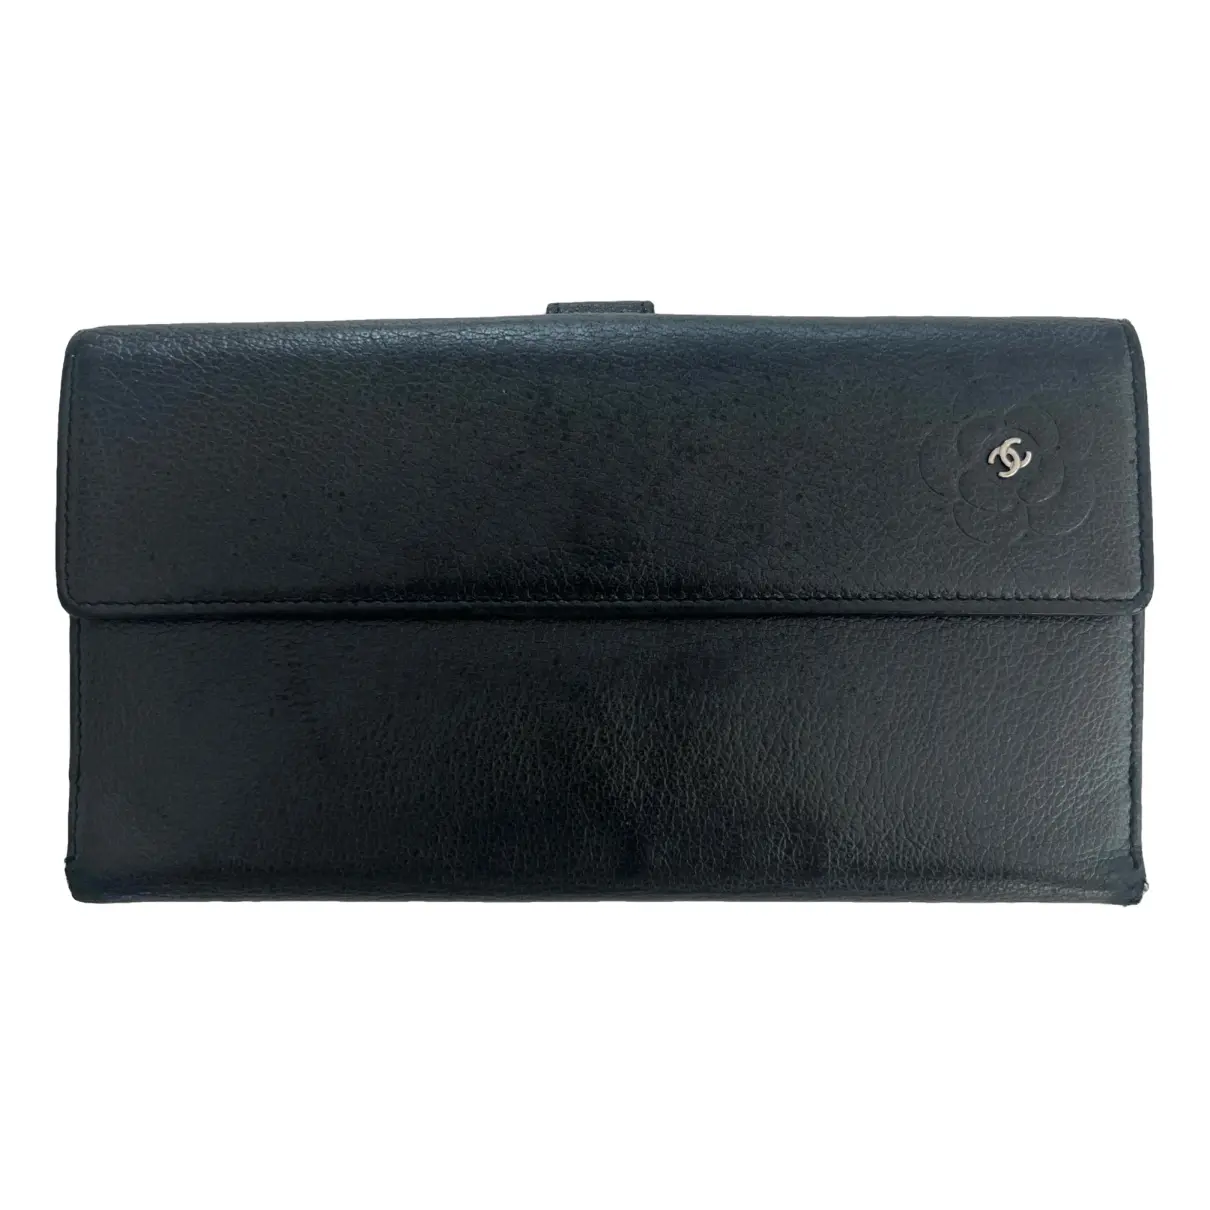 Gabrielle leather wallet